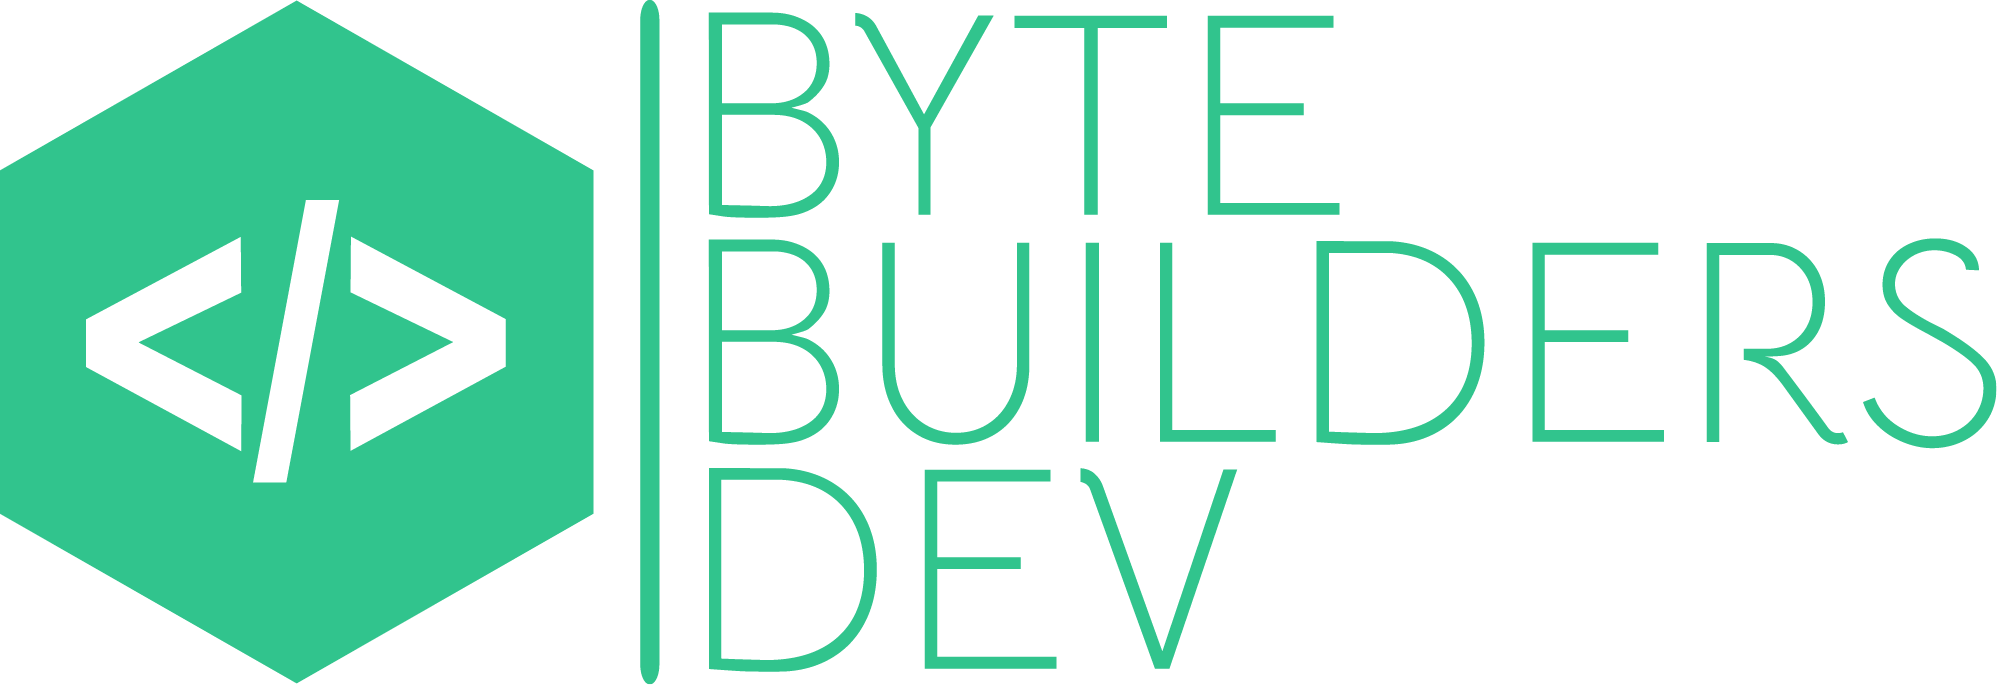 Byte Builders Dev